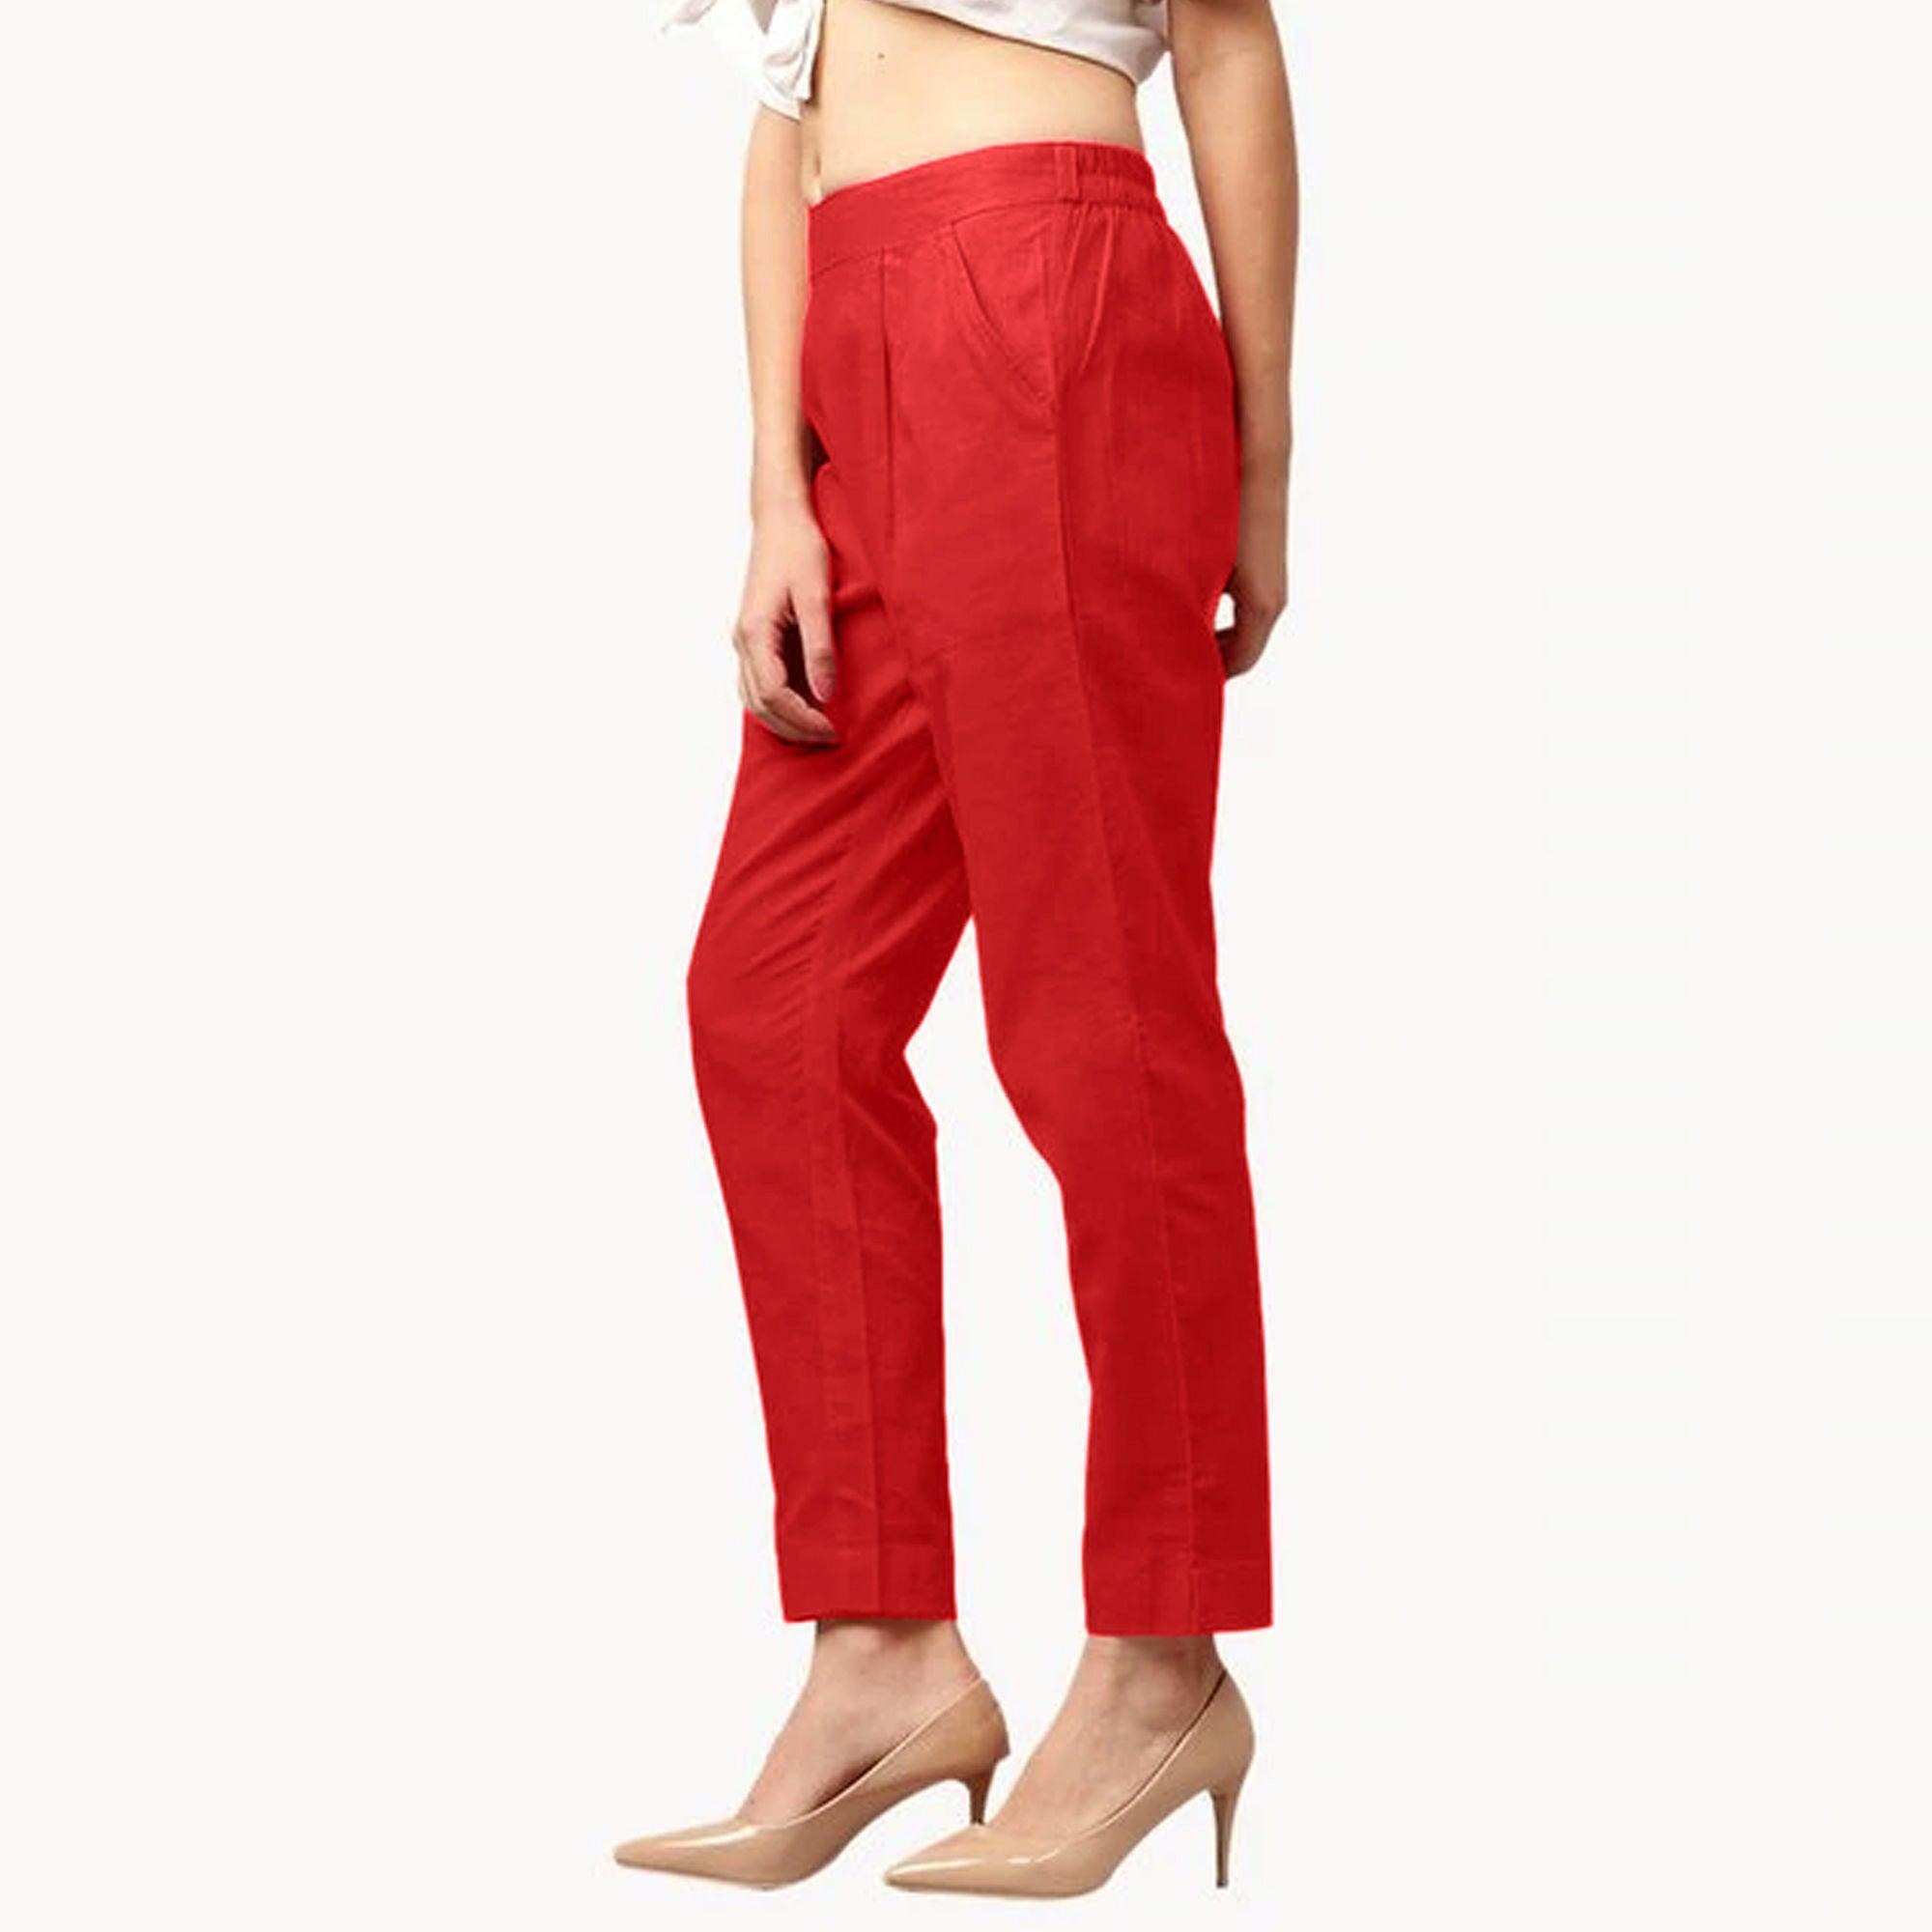 Impressive Red Colored Casual Wear Cotton Pant - Peachmode